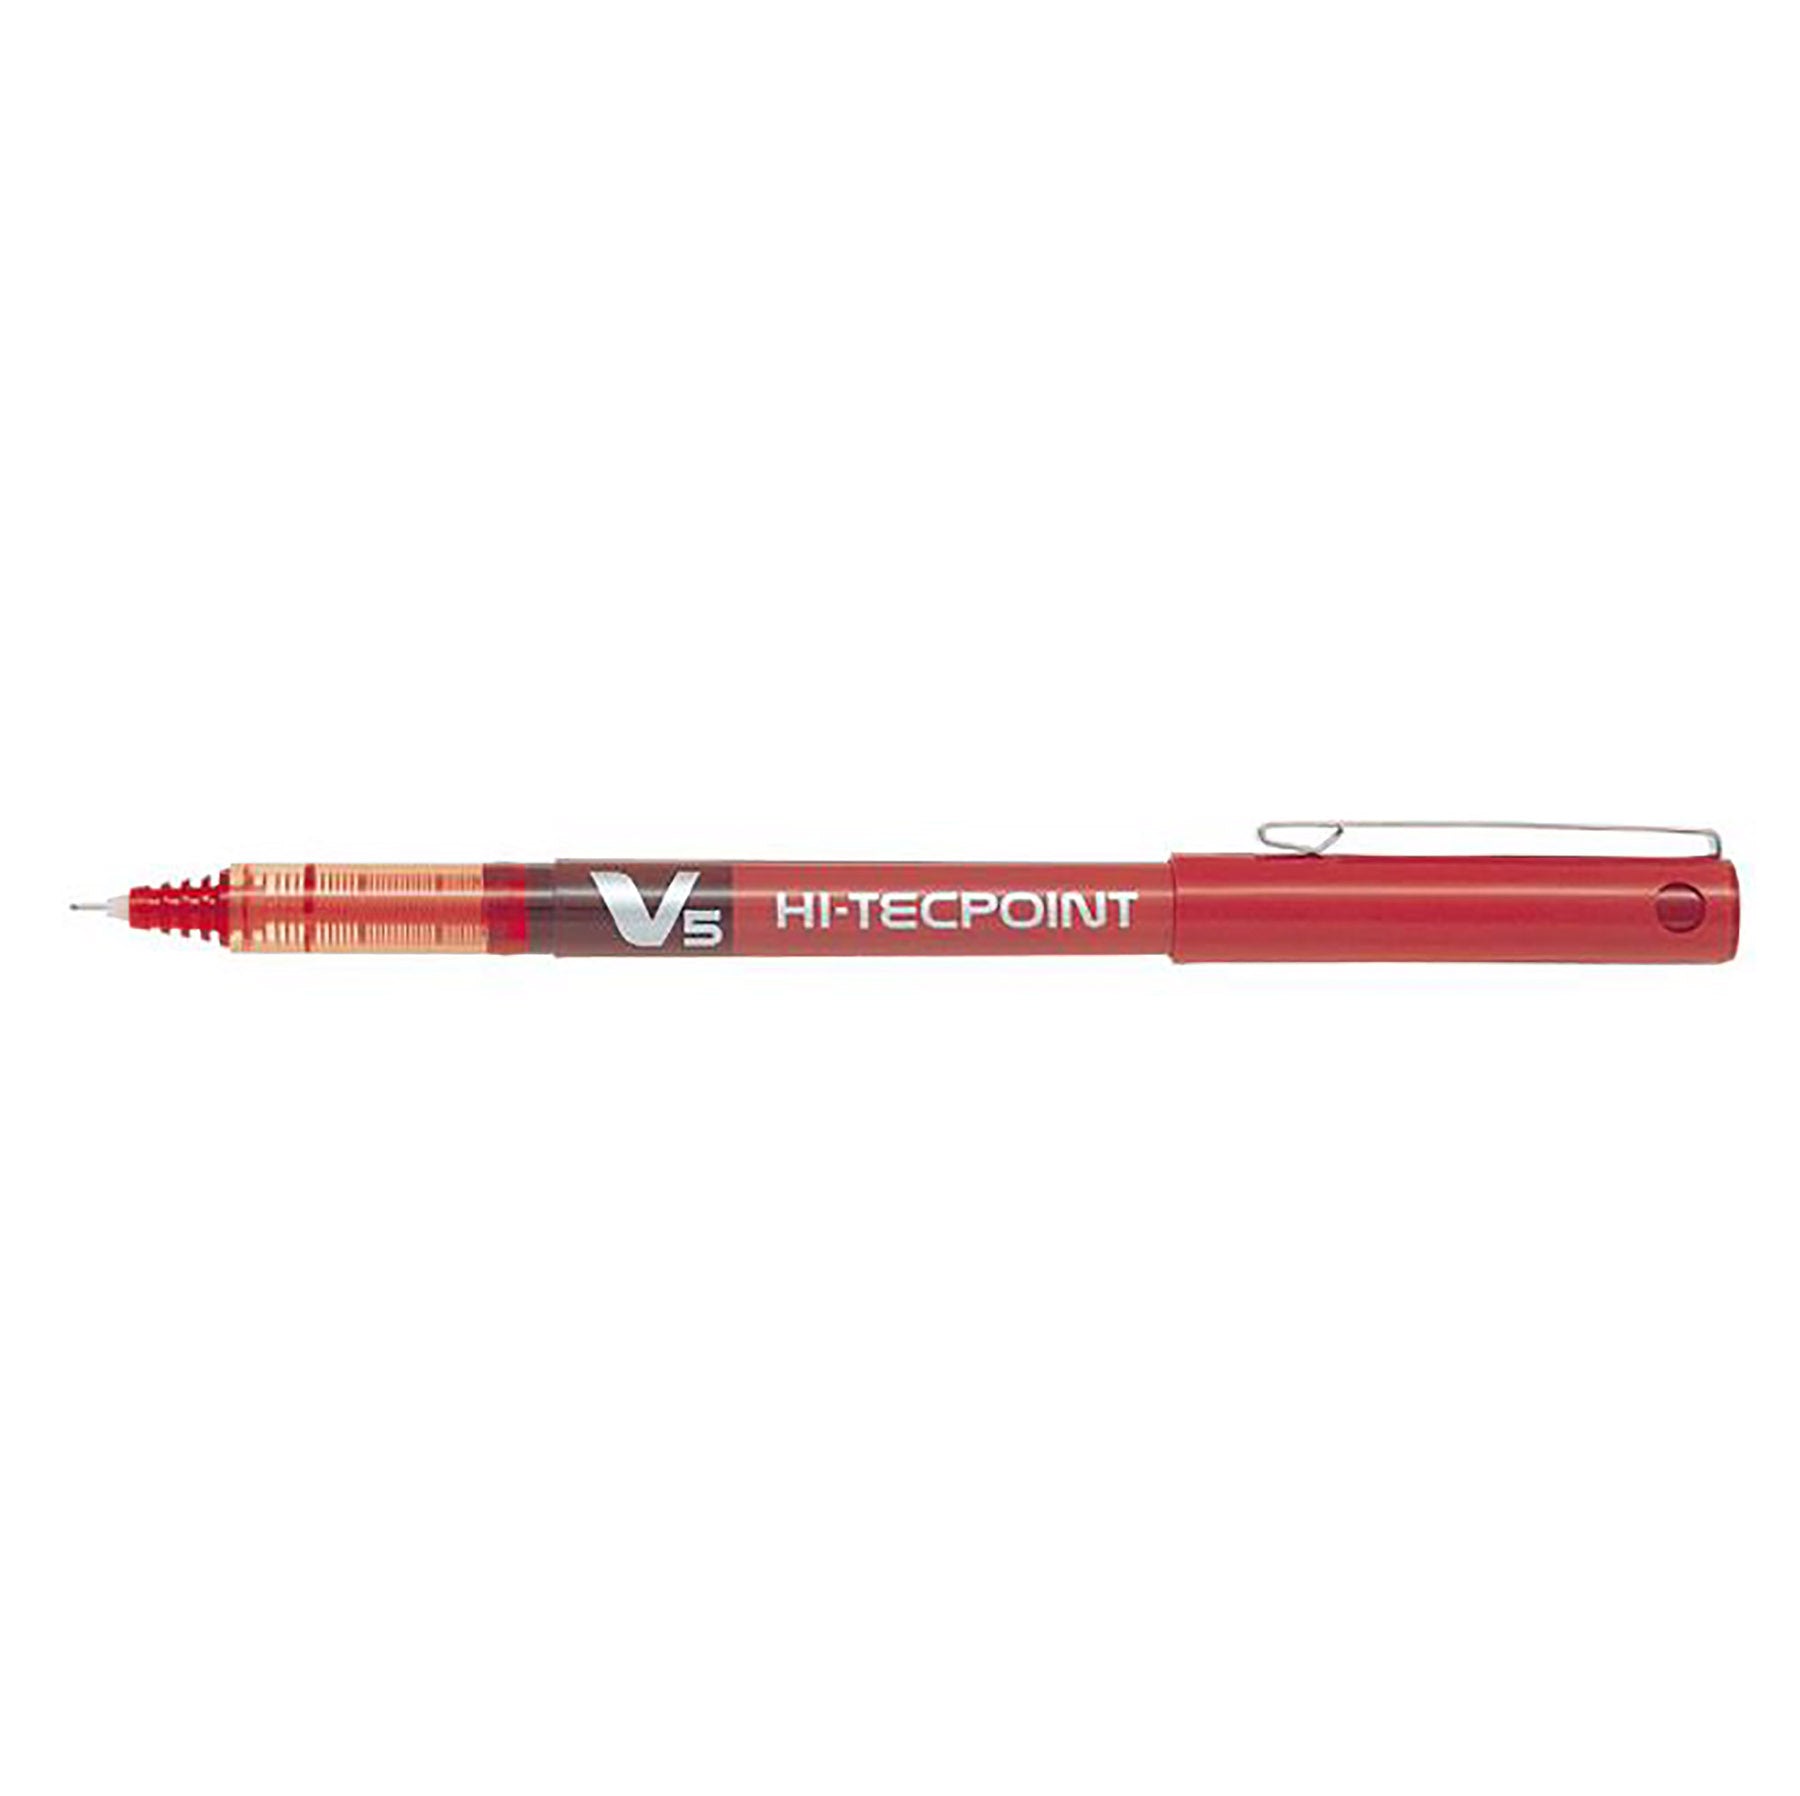 Pilot Hi-Tecpoint Pen with Cap - Red Ink 0.5mm